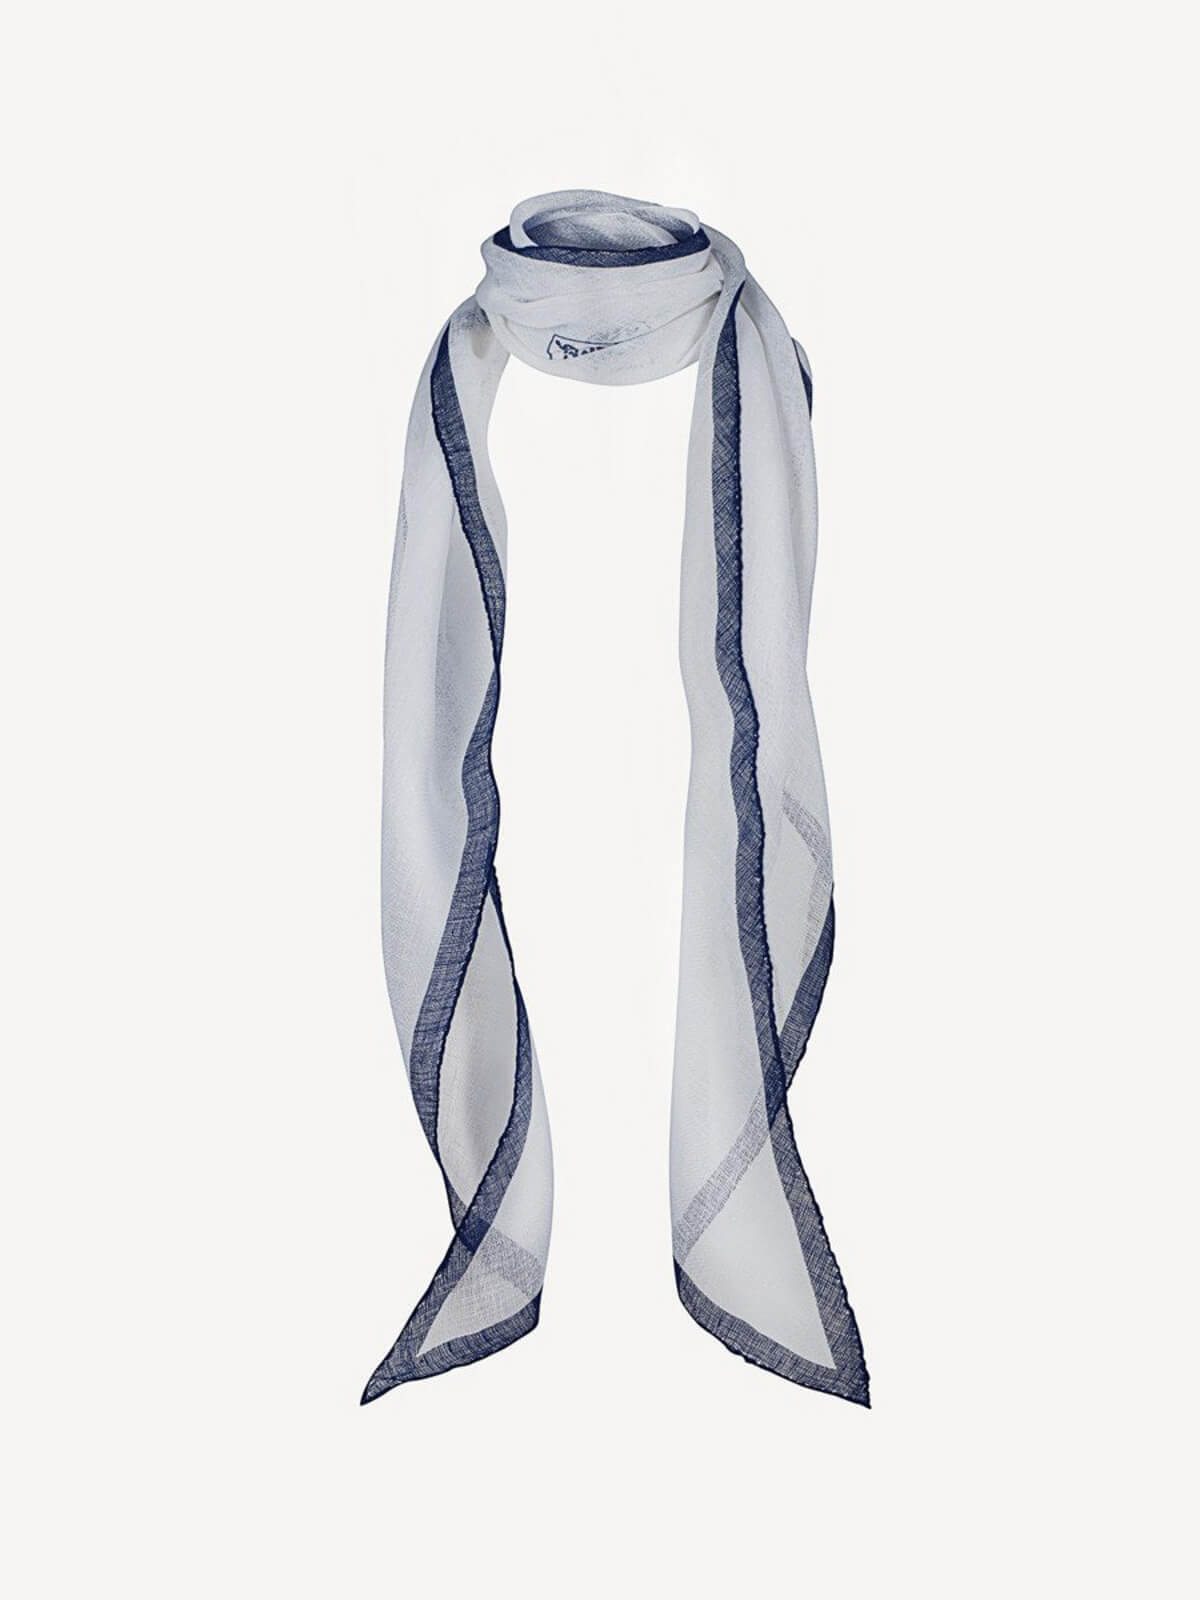 Rhombus Linen Scarf for women 100% Capri white and blue linen scarf